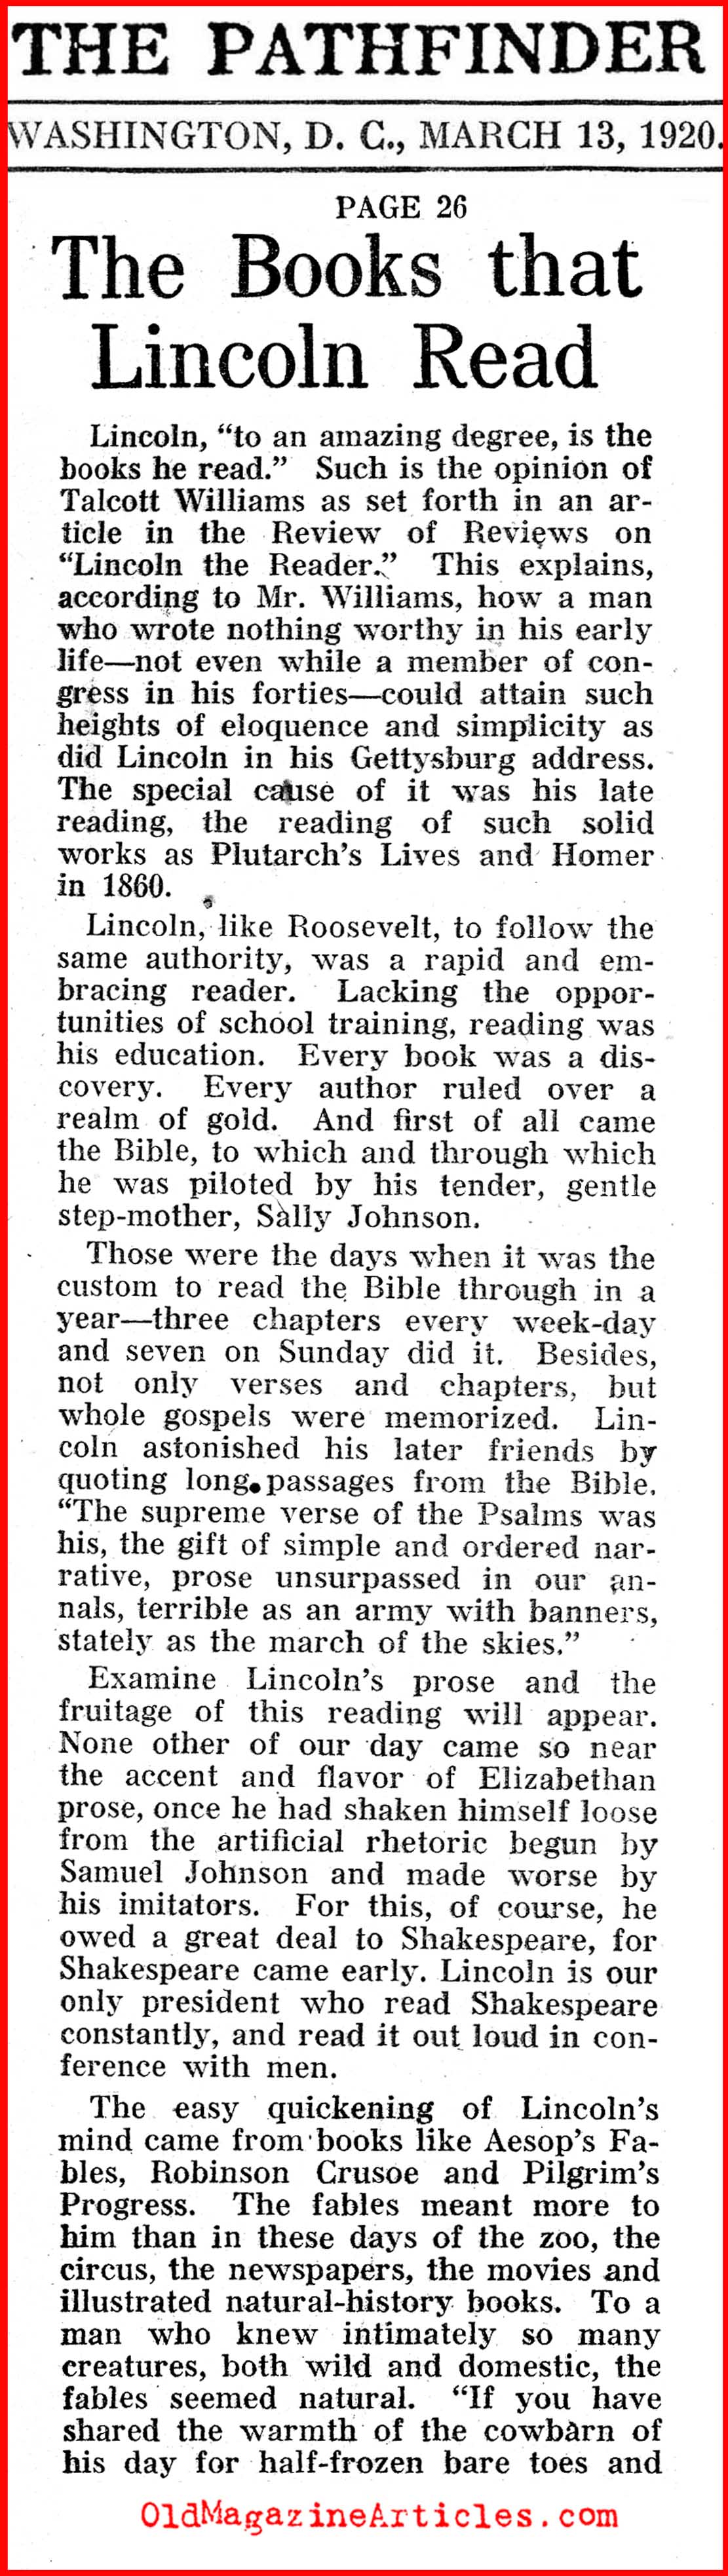 The Books Lincoln Read (Pathfinder Magazine, 1920)